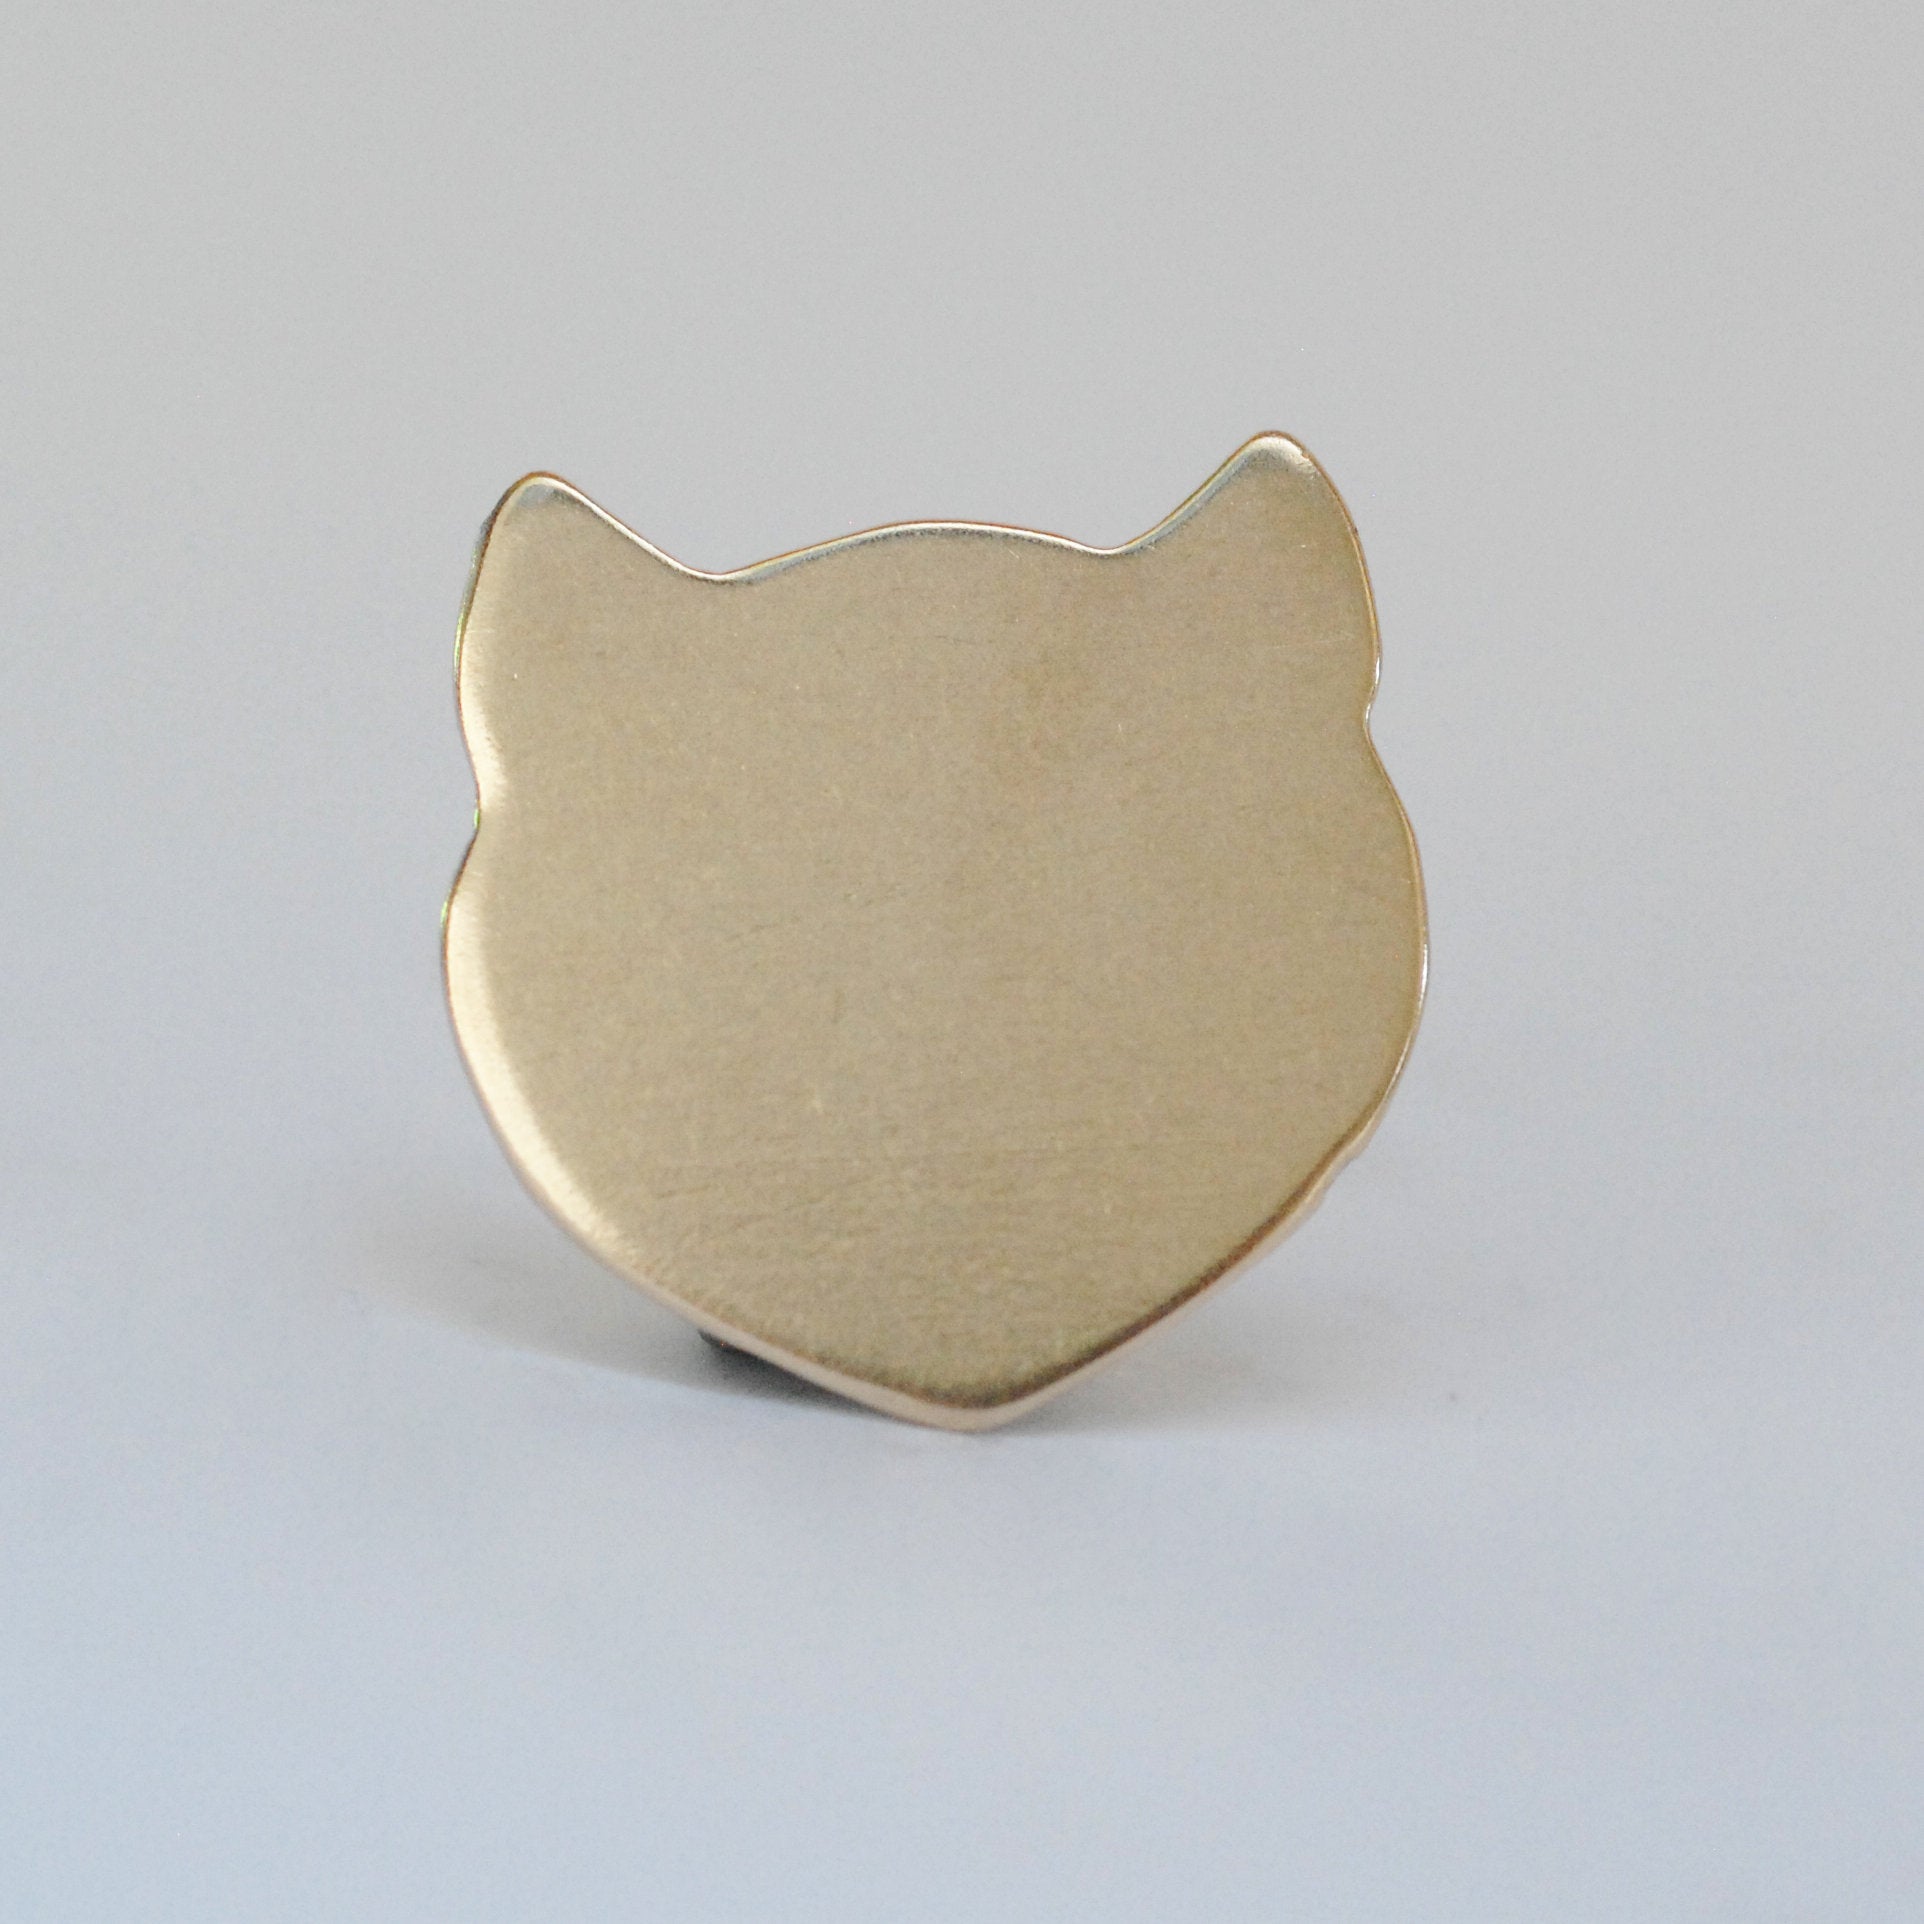 Cat head shape for making jewelry, cat face, copper, brass, bronze, nickel silver 24g 22g 20g